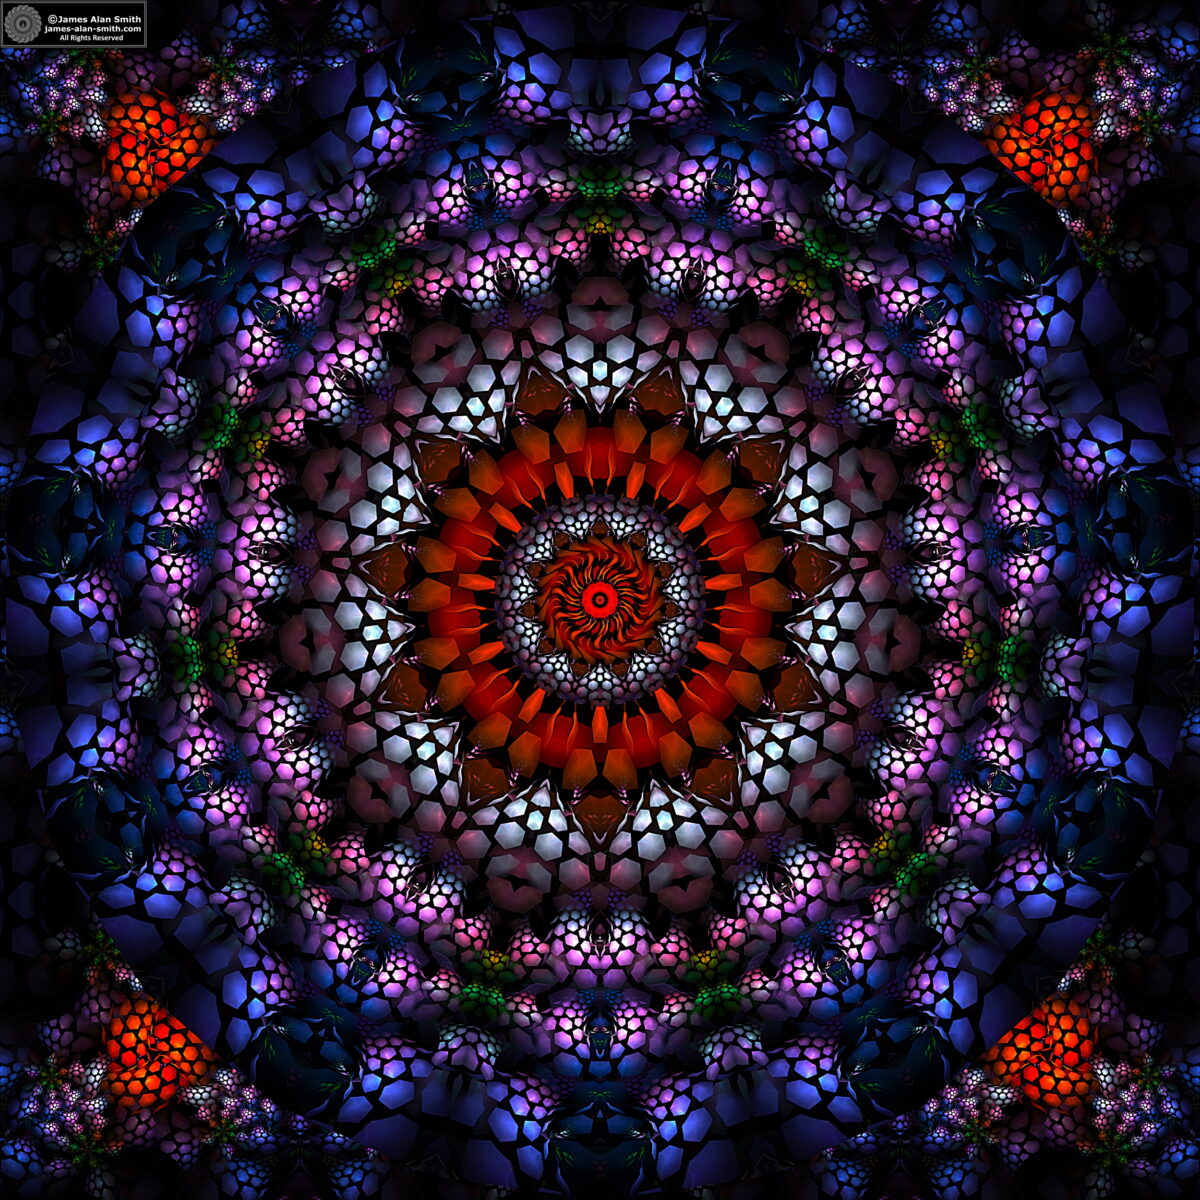 Glowing Star Mandala: Artwork by James Alan Smith